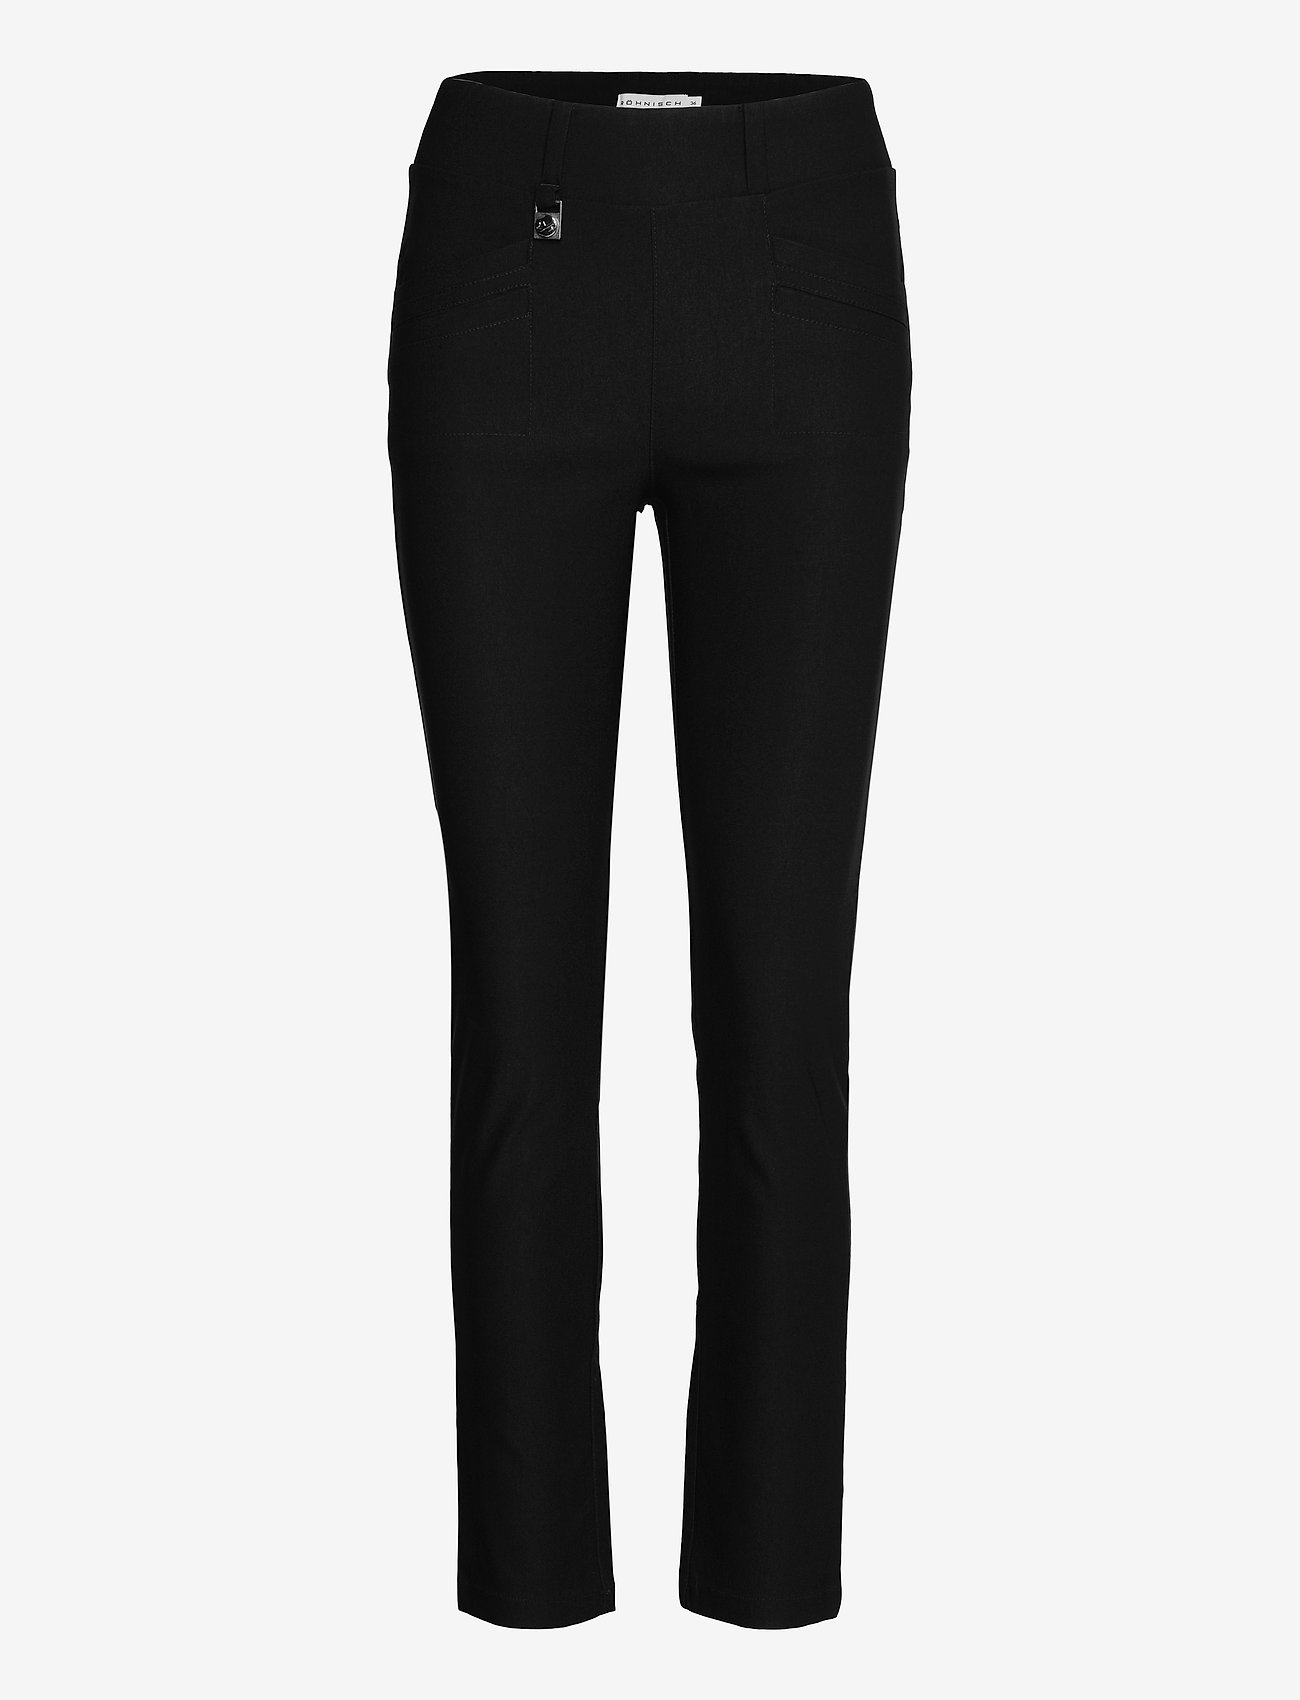 Röhnisch - Embrace Pants 30 - golf pants - black - 1